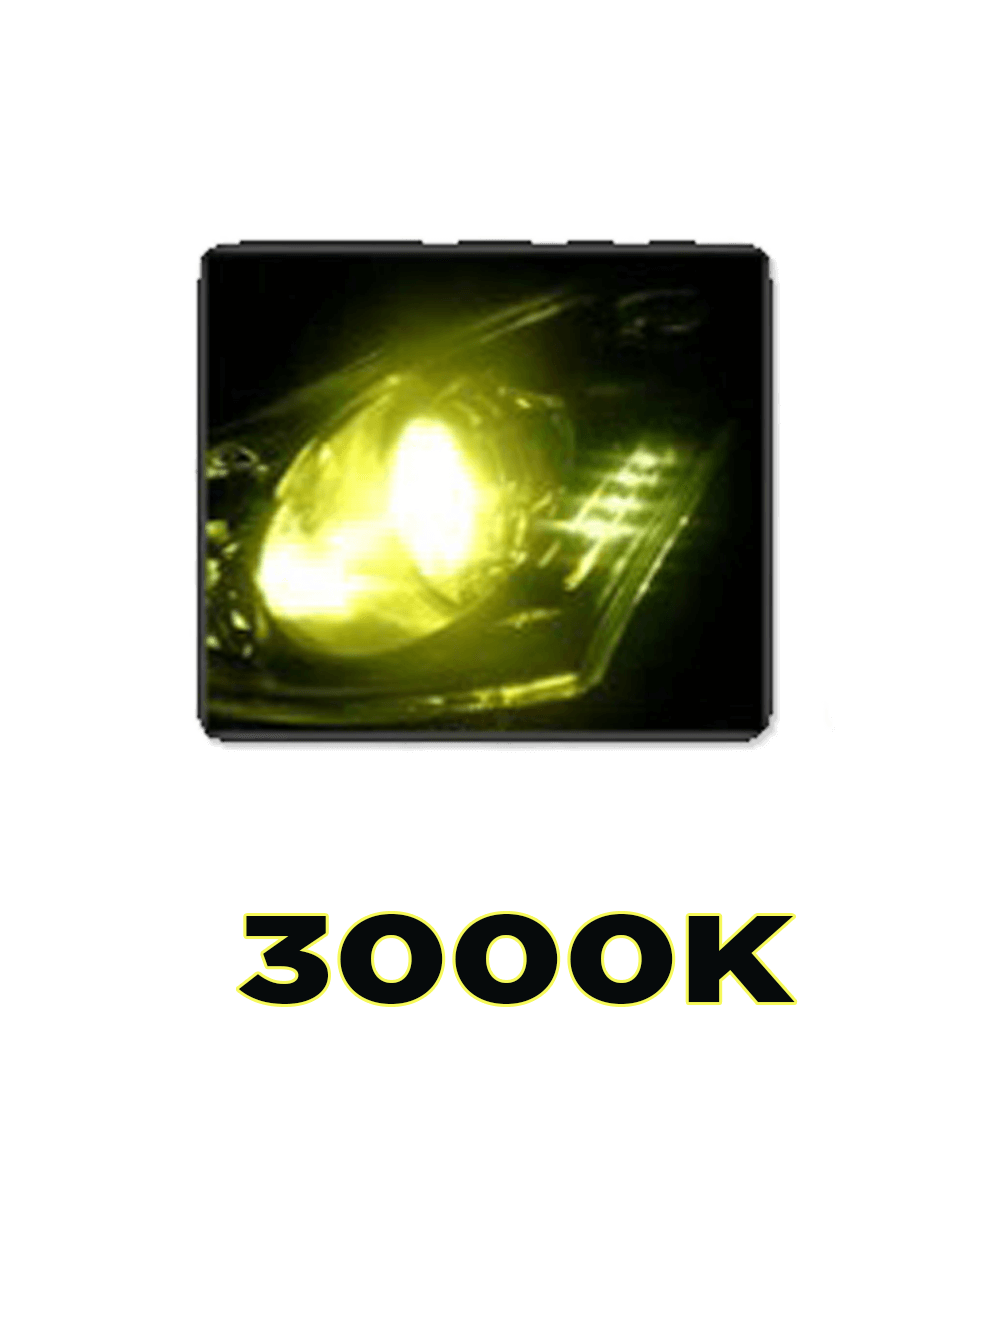 Luminous LBULBS H1 3K AC HID Headlight AC Bulbs H1 Golden Yellow- 3000K